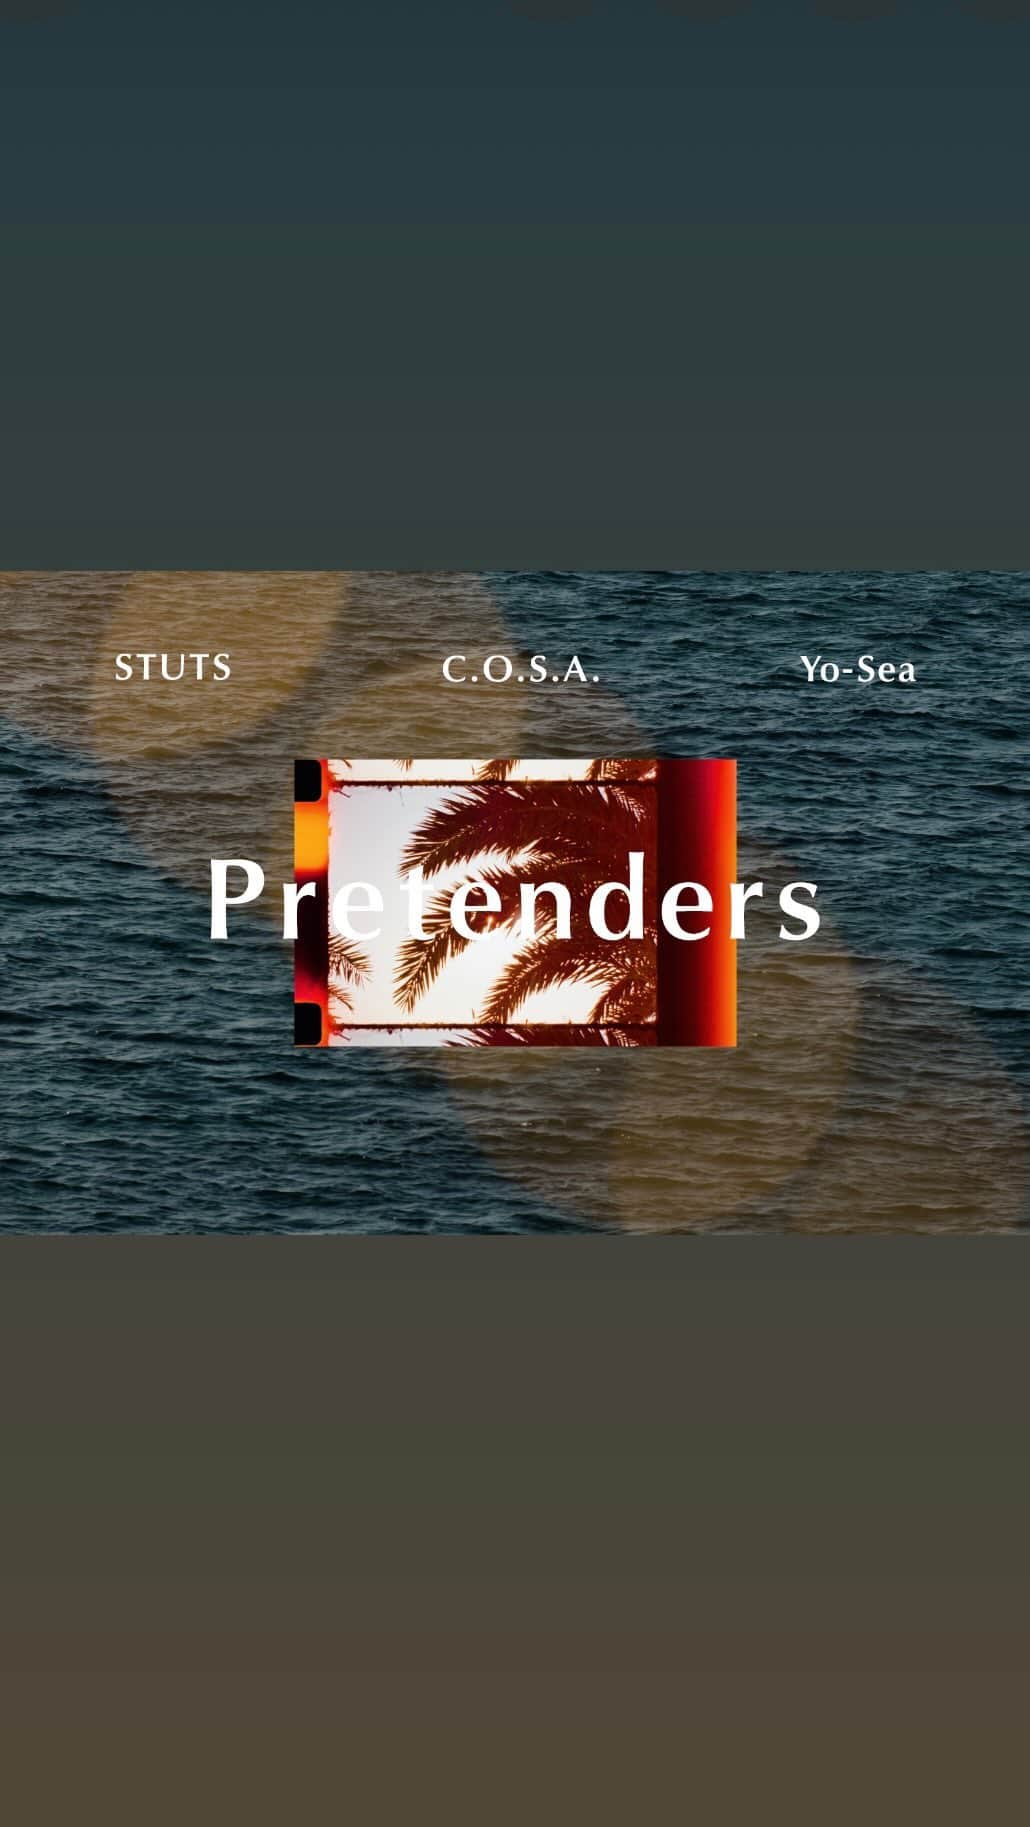 STUTSのインスタグラム：「STUTS - Pretenders feat. C.O.S.A. & Yo-Sea (Official Music Video) out now. Directed by Ryoji Kamiyama  C.O.S.A.さん、Yo-Sea君と作らせてもらったPretendersのMusic Videoが公開されました。 監督はRyoji Kamiyamaさんです。 沖縄の北谷で撮影しました。 ぜひご覧下さい。  [Video staff] Director: Ryoji Kamiyama @ryojikamiyama DOP: Yuki Hori @holyze Camera Assistant: Udai @udai65 PM: Hayato Takano @hayato1983 Title Design: Yoshiyuki Nakakuki @hongkongstarr  [Credits] Written by C.O.S.A., Yo-Sea Produced by STUTS Synthesizer, Piano, All Other Instruments, Programming, Audio Editing: STUTS  Mixed by STUTS at Atik Studio Mastered by Chris Athens」